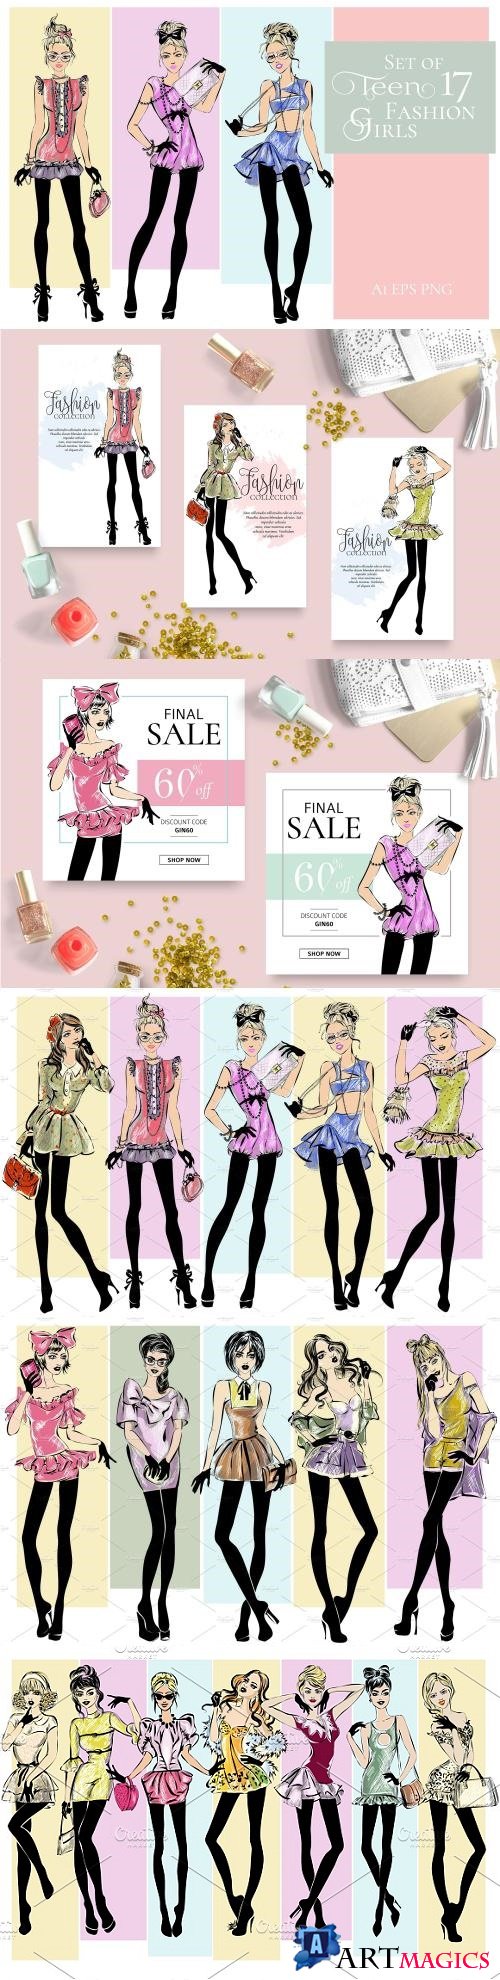 17 Teen Fashion Girls Illustrations - 2420554